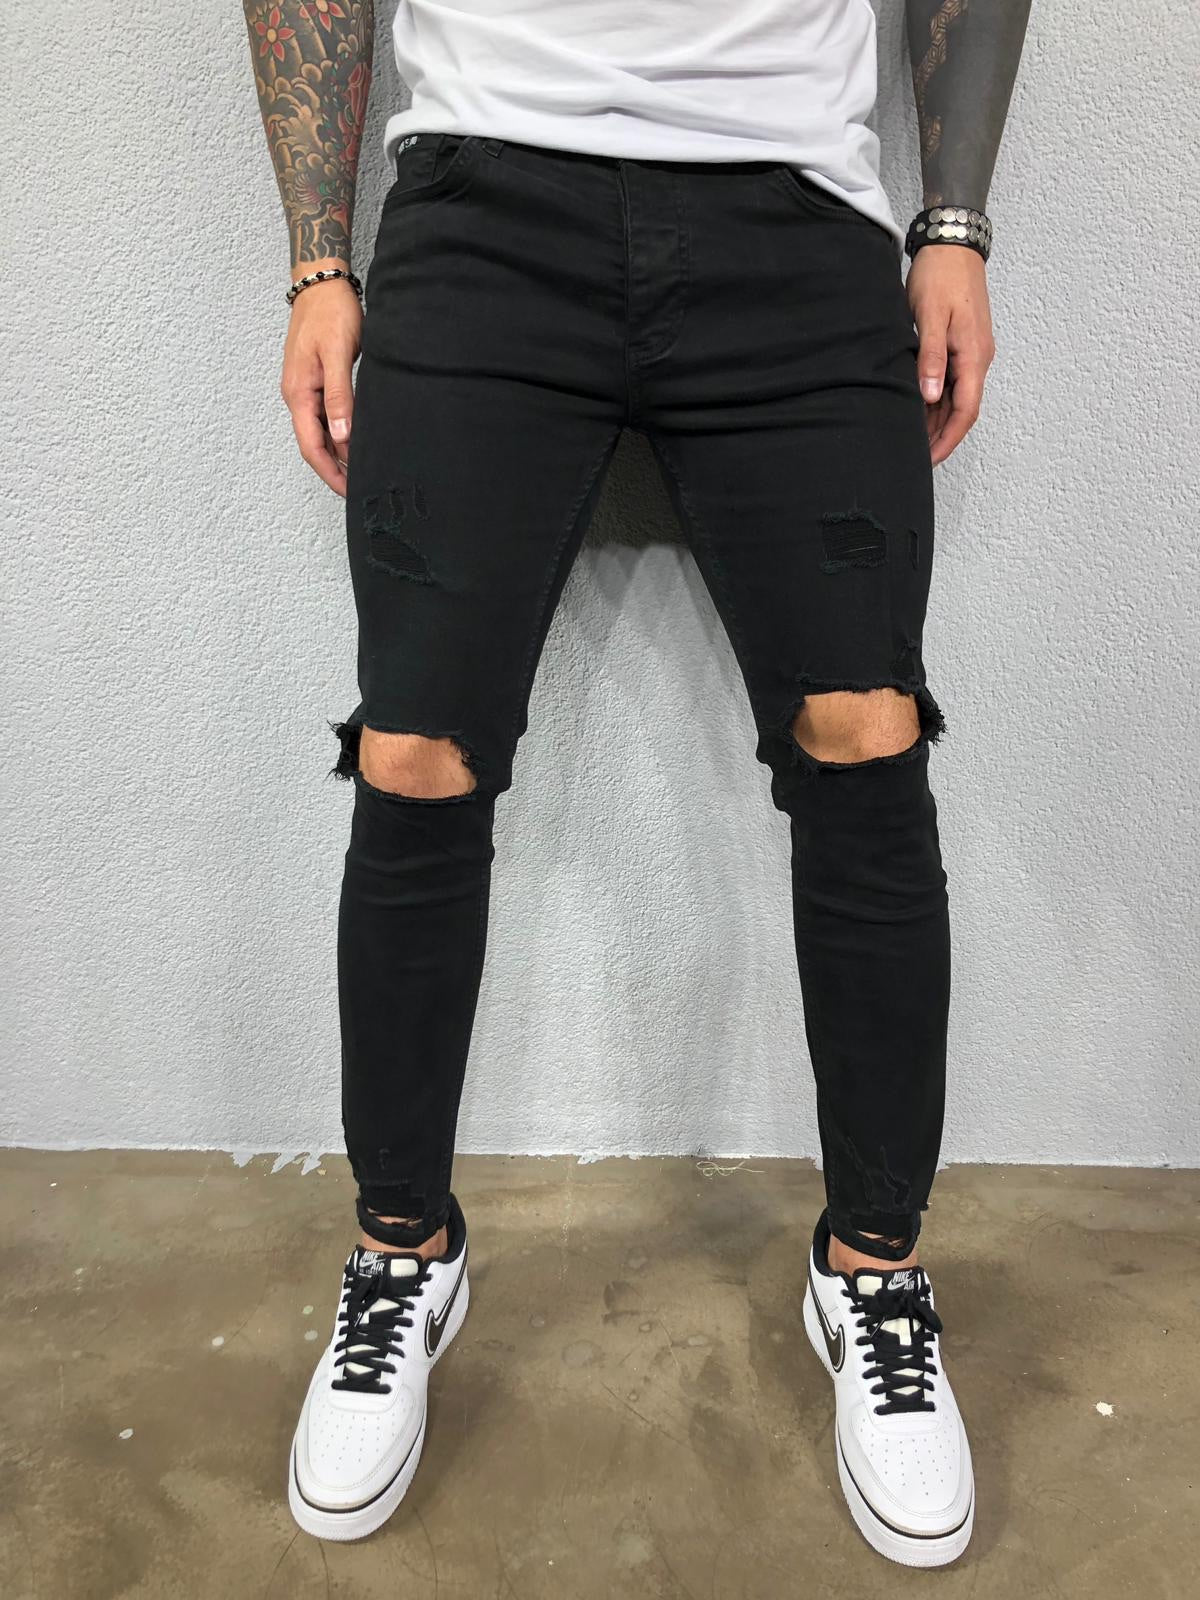 black ripped jeans slim fit mens